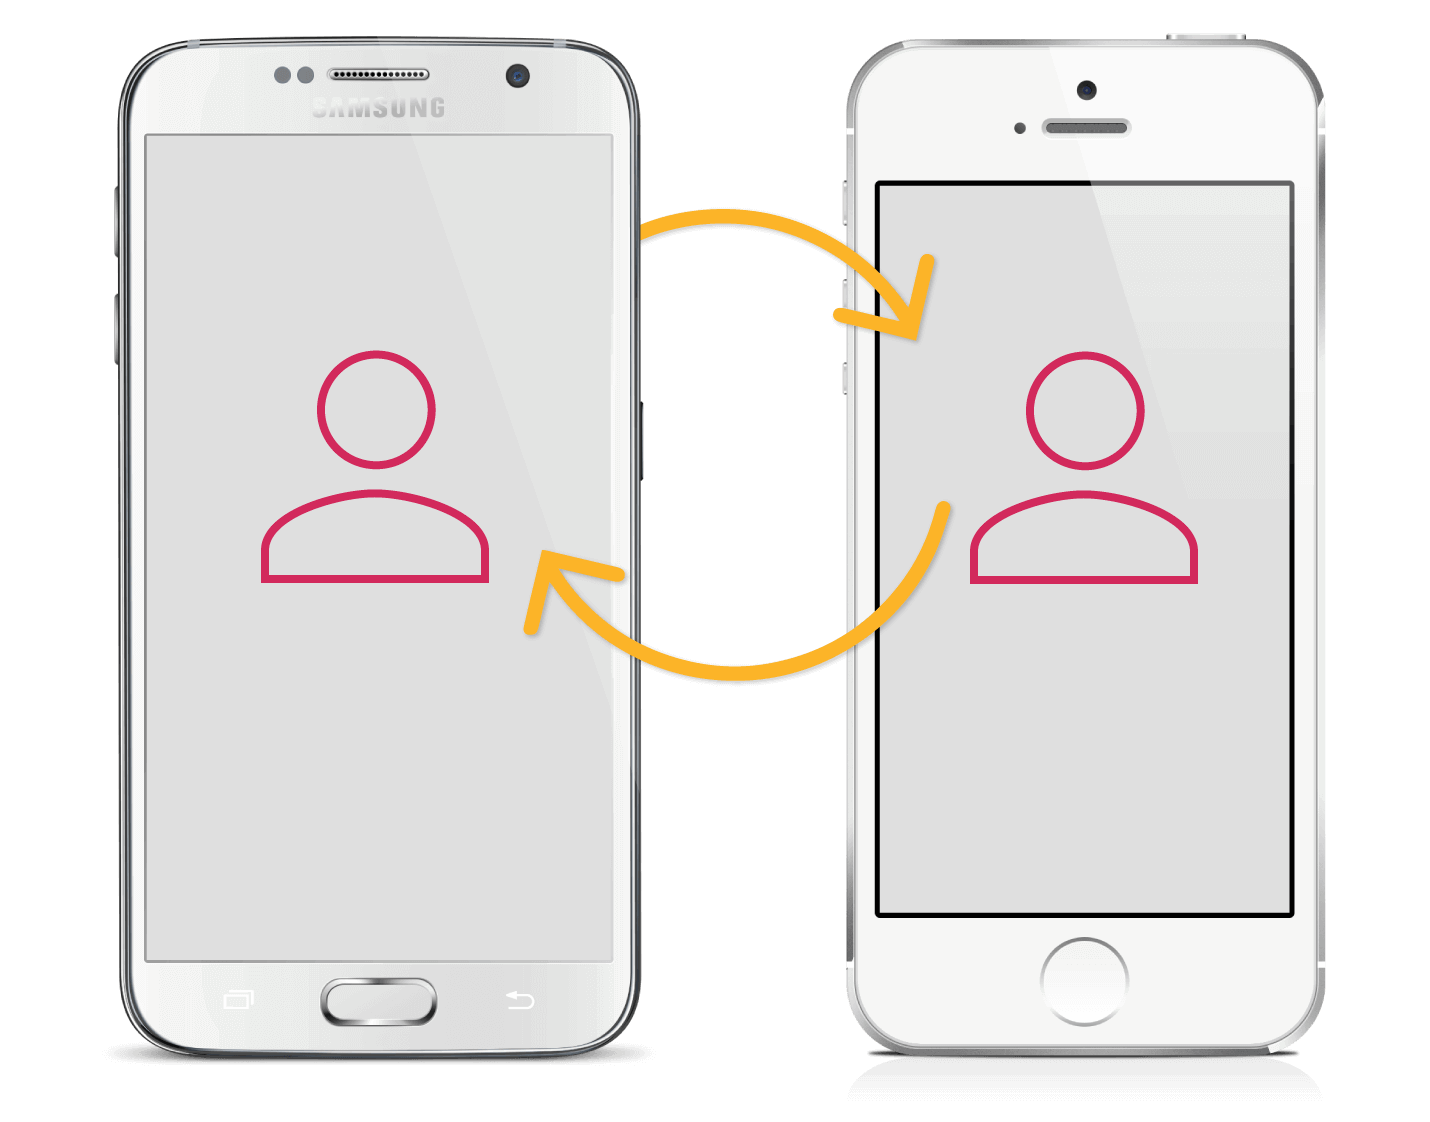 Synchroniser les contacts de l’iPhone avec Android